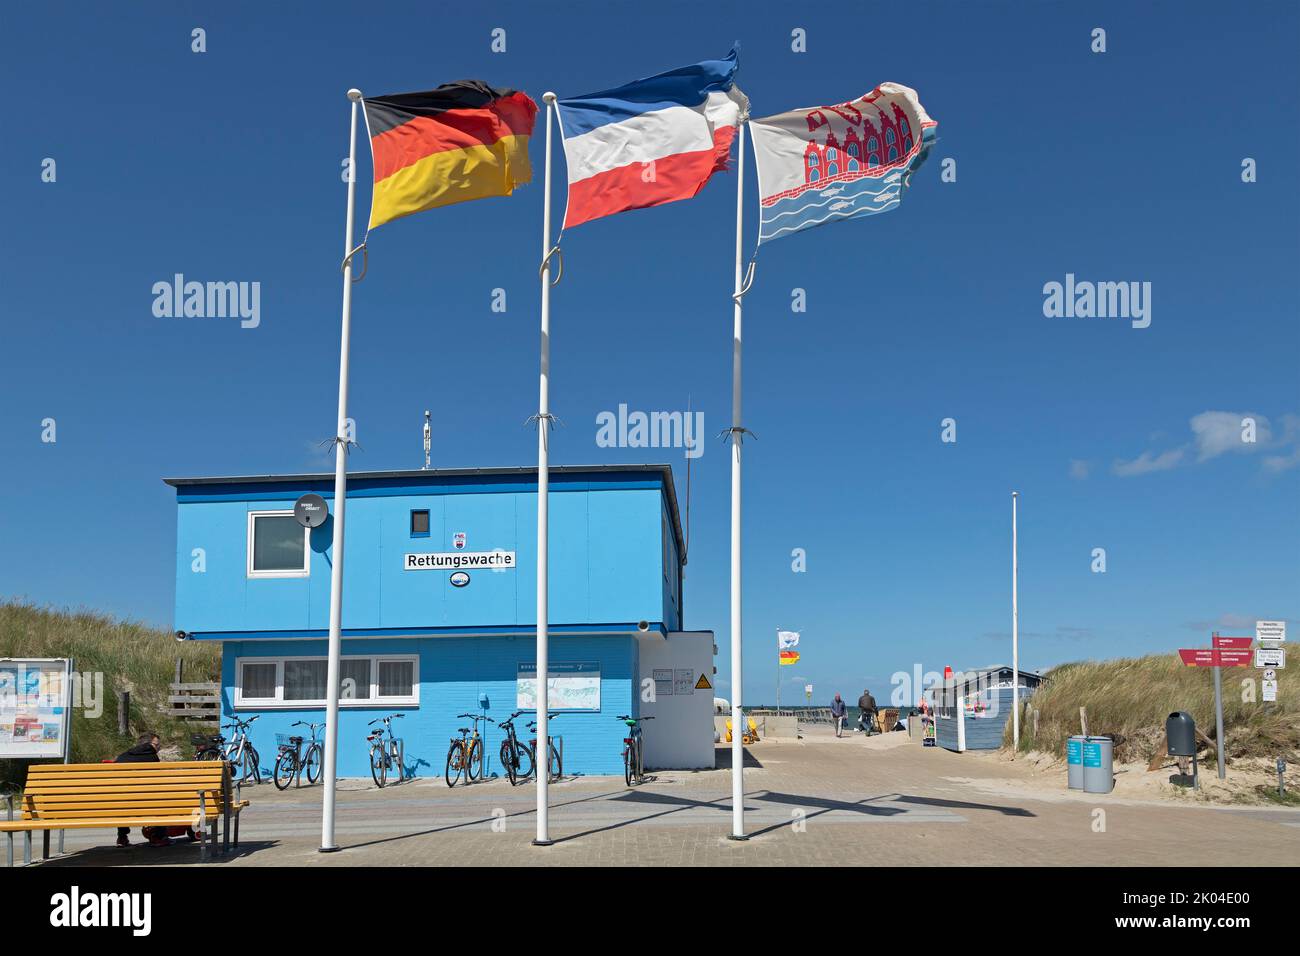 Station de sauvetage, drapeaux, péninsule de Steinwarder, Heiligenhafen, Schleswig-Holstein, Allemagne Banque D'Images